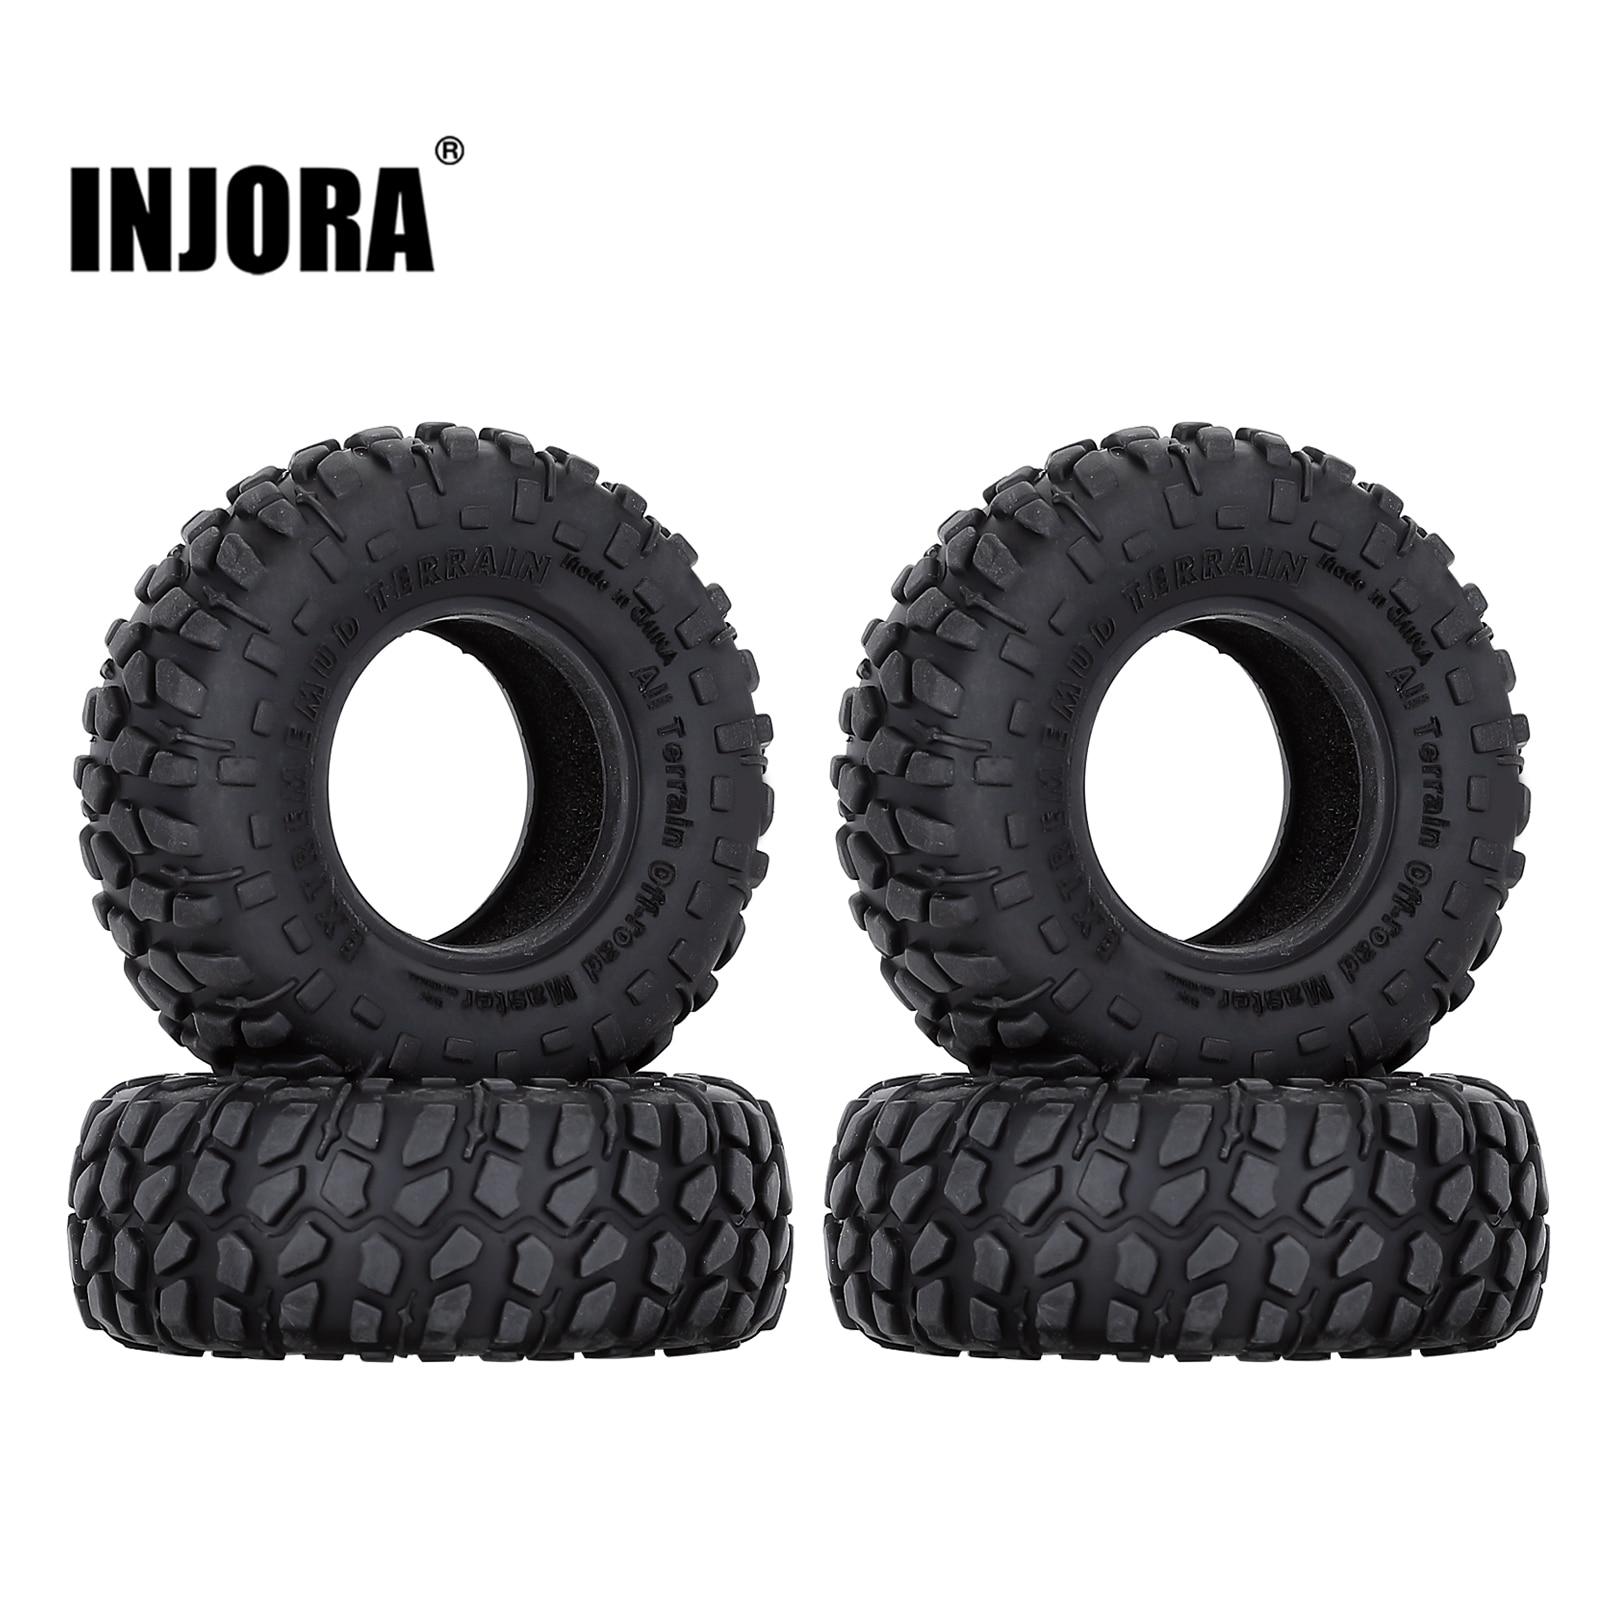 INJORA-4PCS-49-17mm-Rubber-Extreme-Mud-Terrain-1-0-Wheel-Tires-for-1-24-RC.jpg